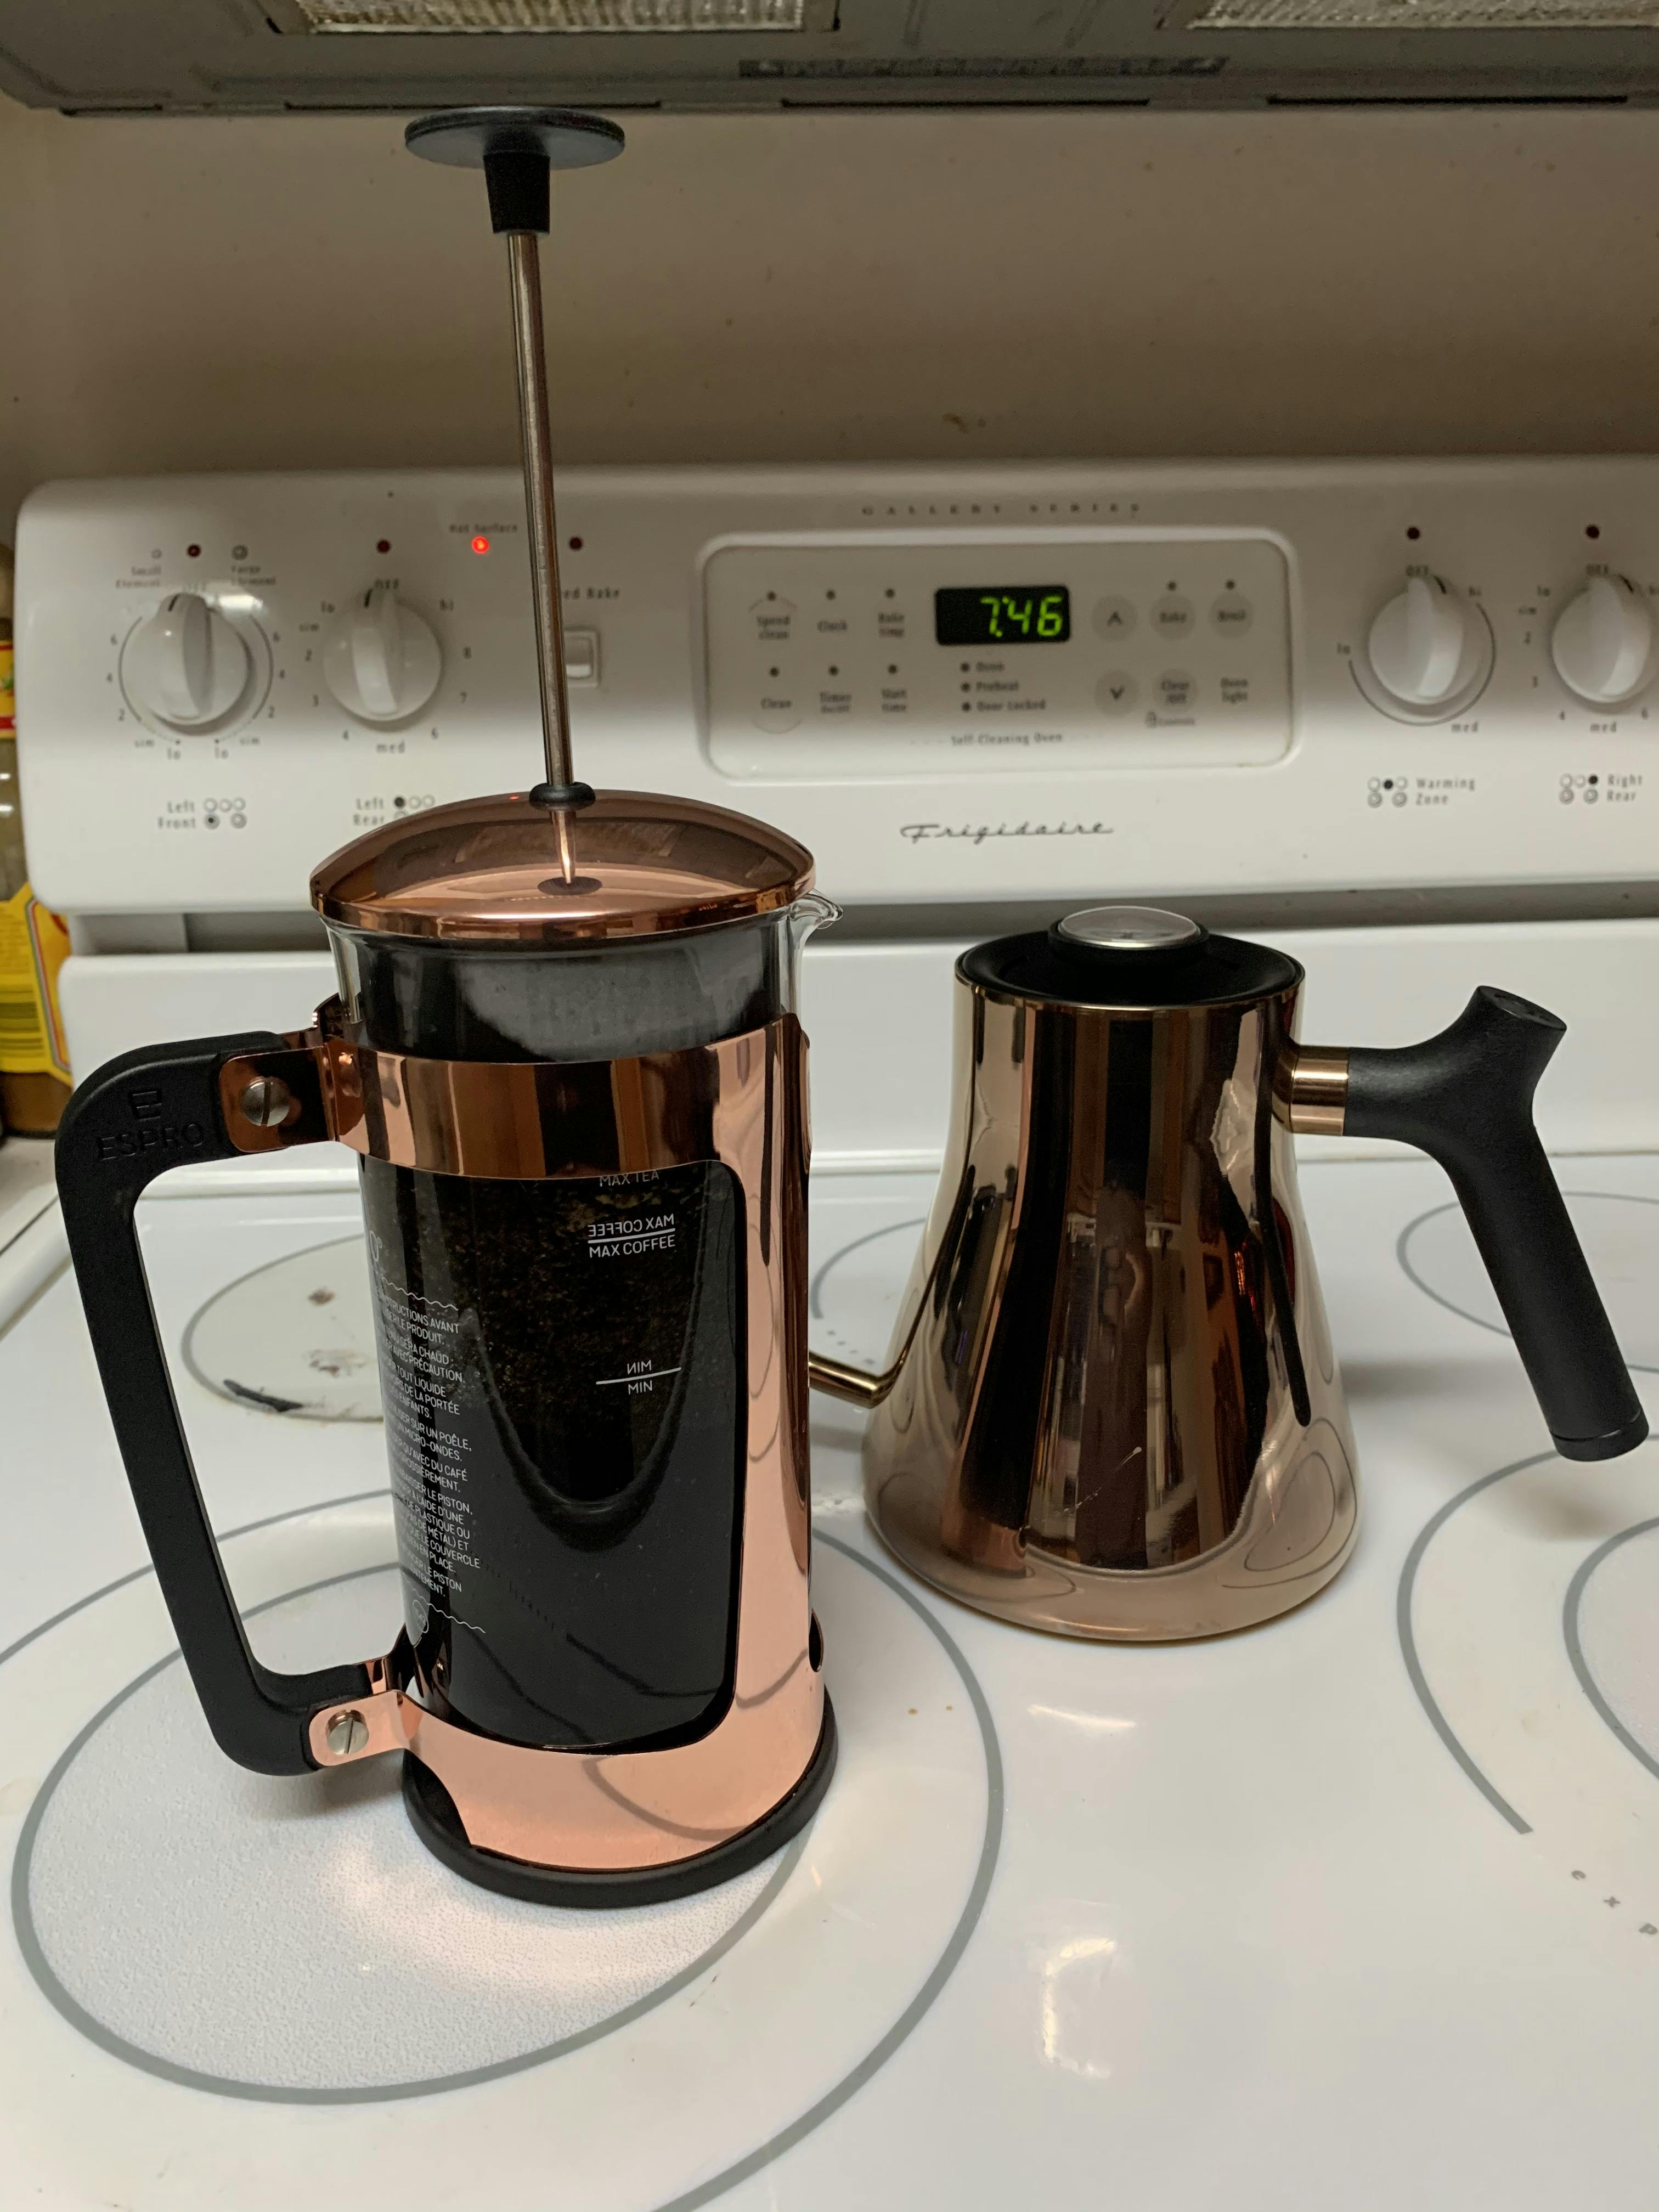 Pour-Over Coffee Gooseneck Kettle, Size: 22 oz, Black